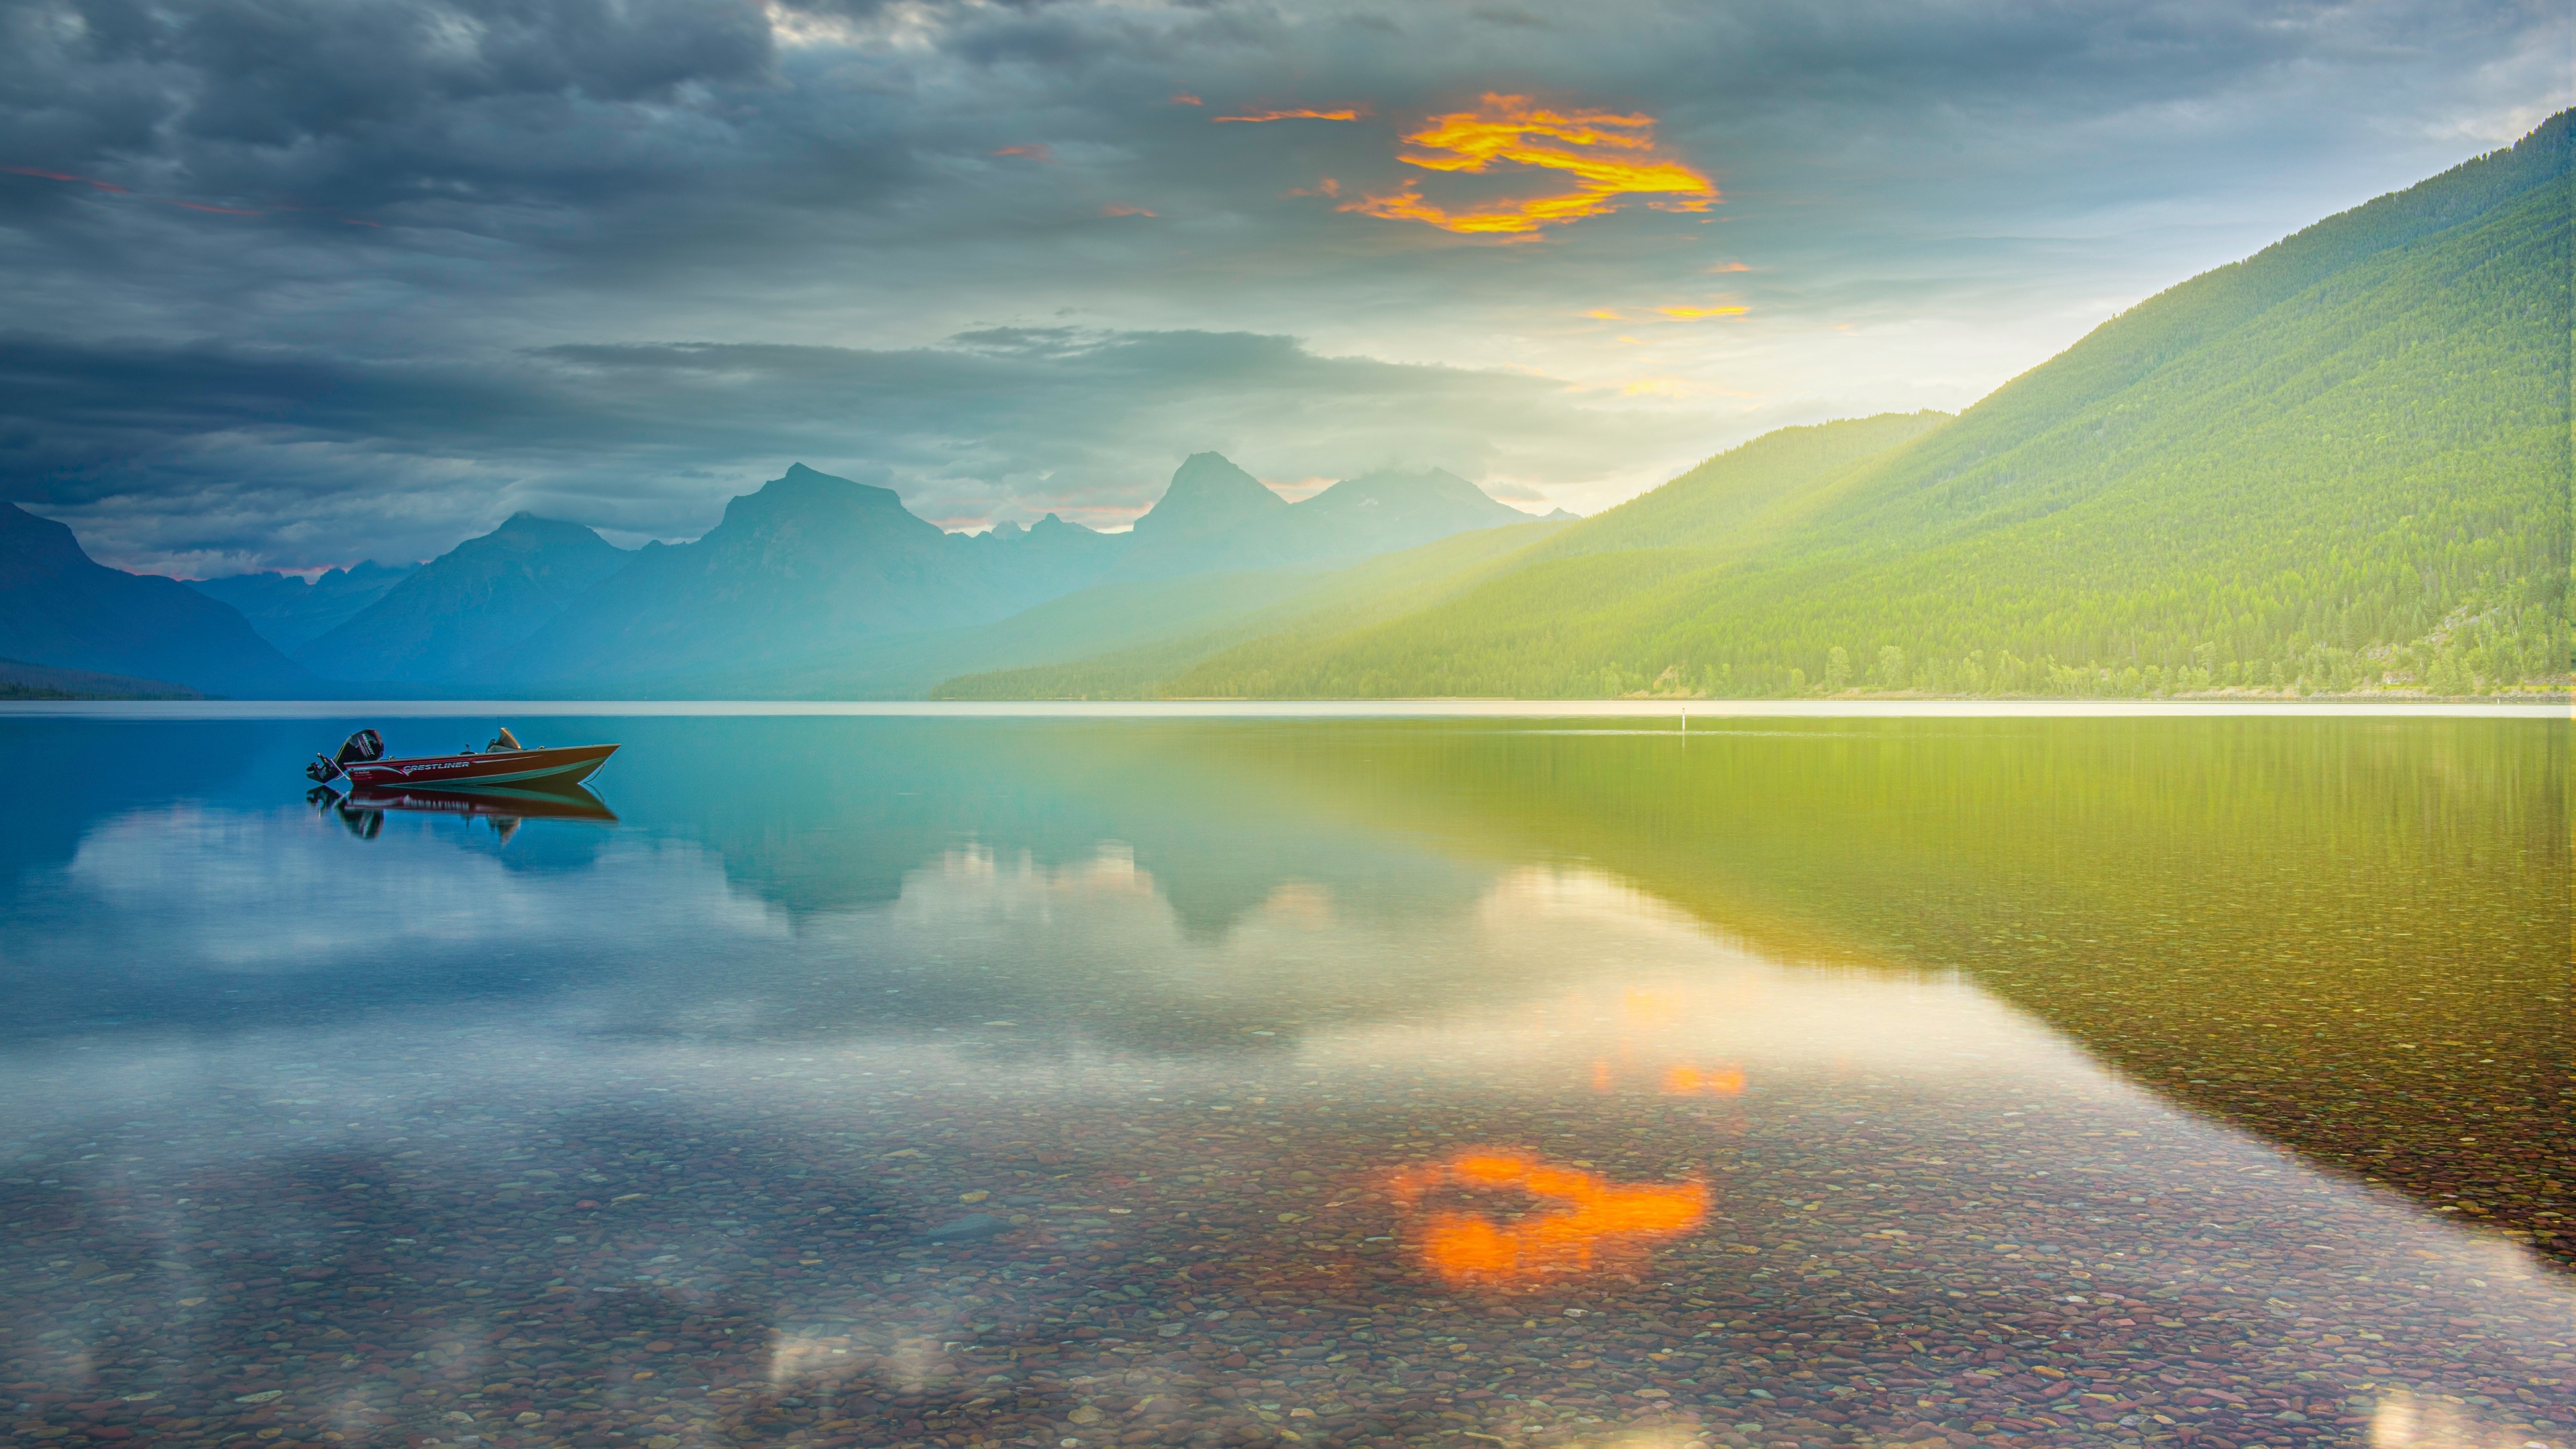 Glacier Park beauty, Lake McDonald, Sunrise tranquility, 4K wallpaper, 3840x2160 4K Desktop